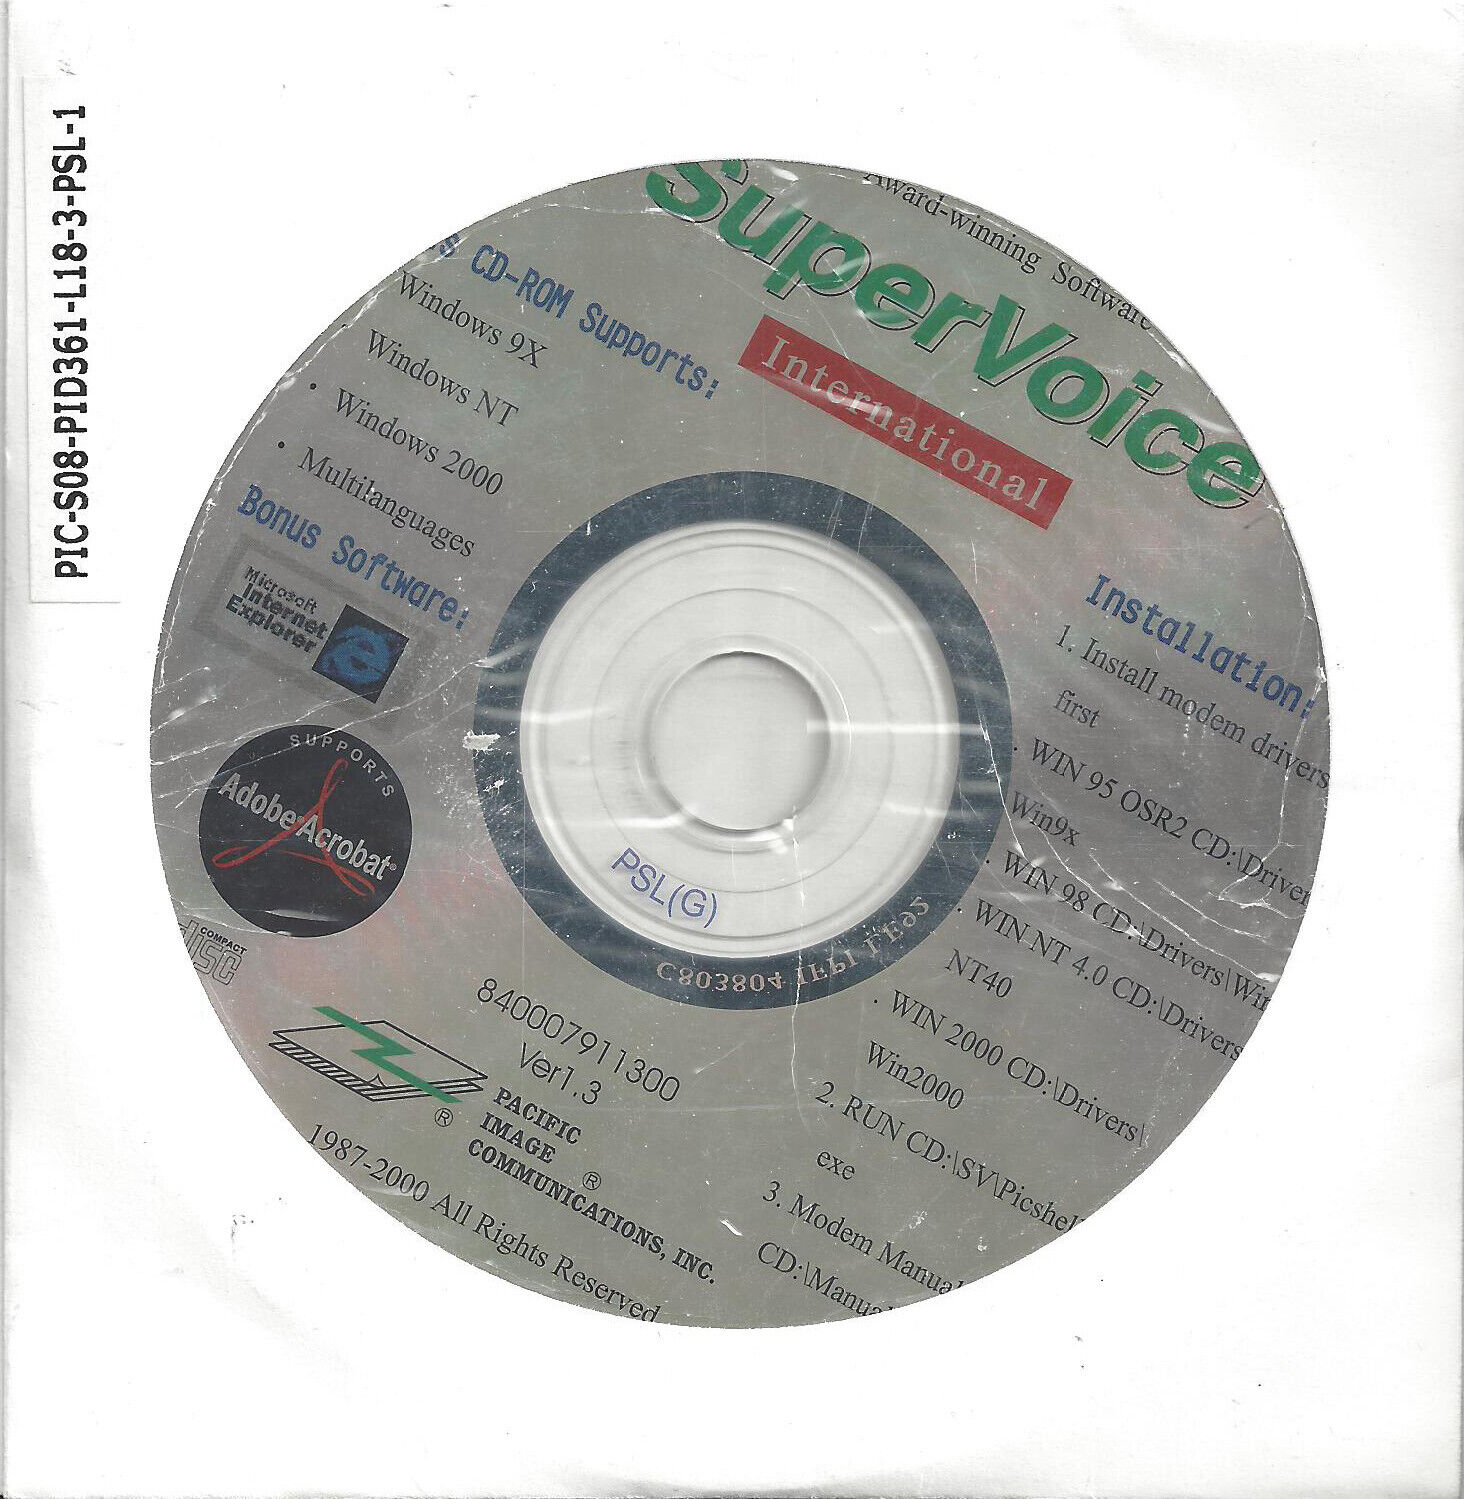 CD SuperVoice International Pacific Image Vtg 2000 RARE Retro Tech